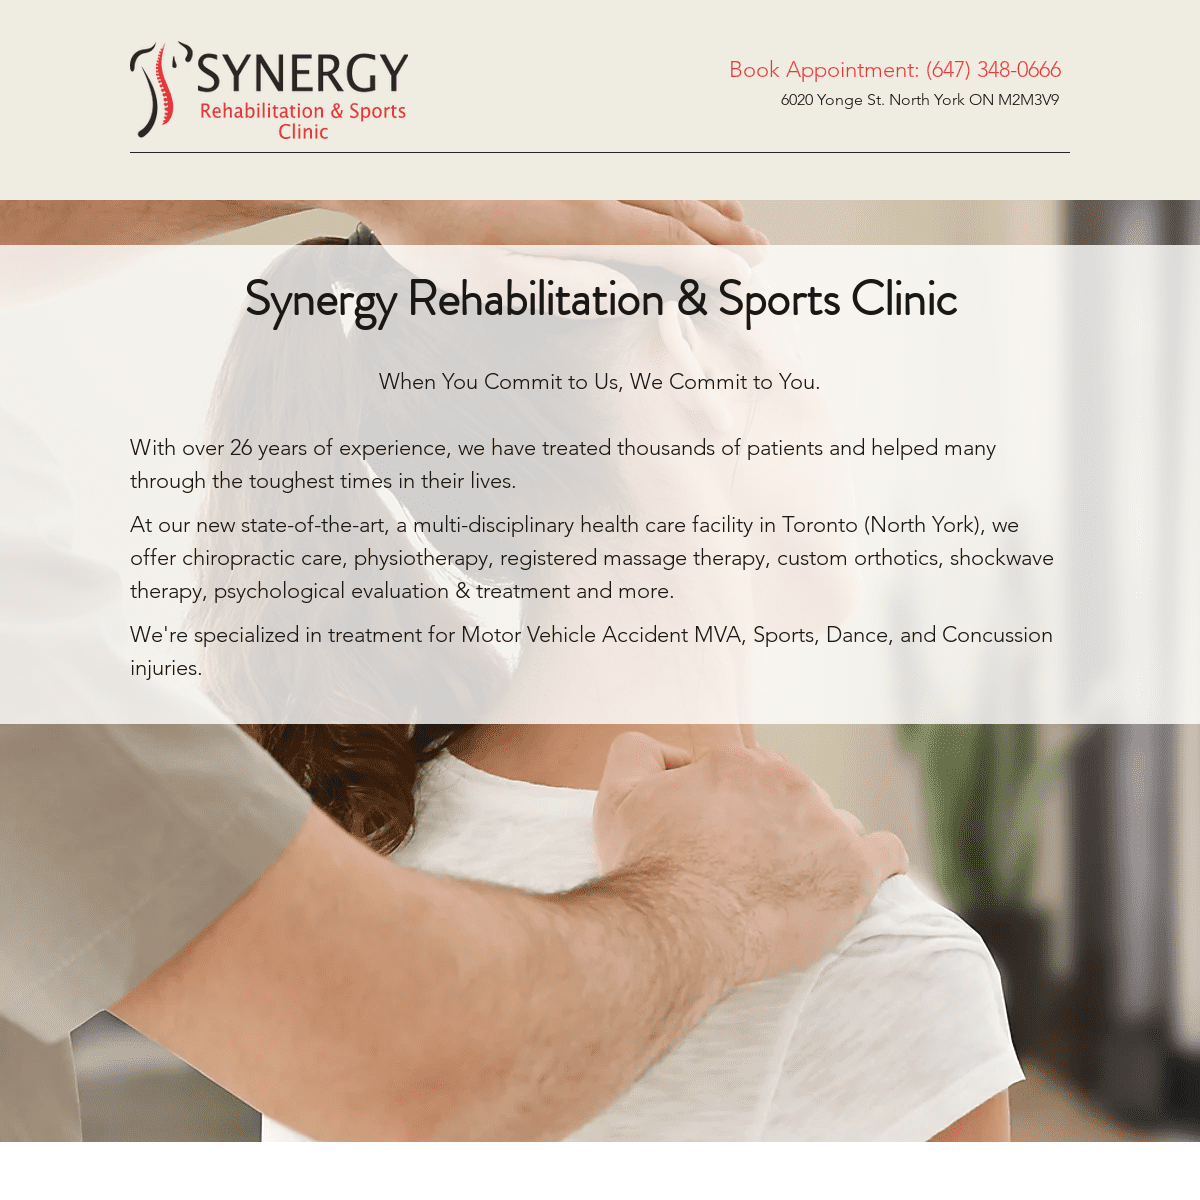 A complete backup of synergyrehabilitationclinic.com